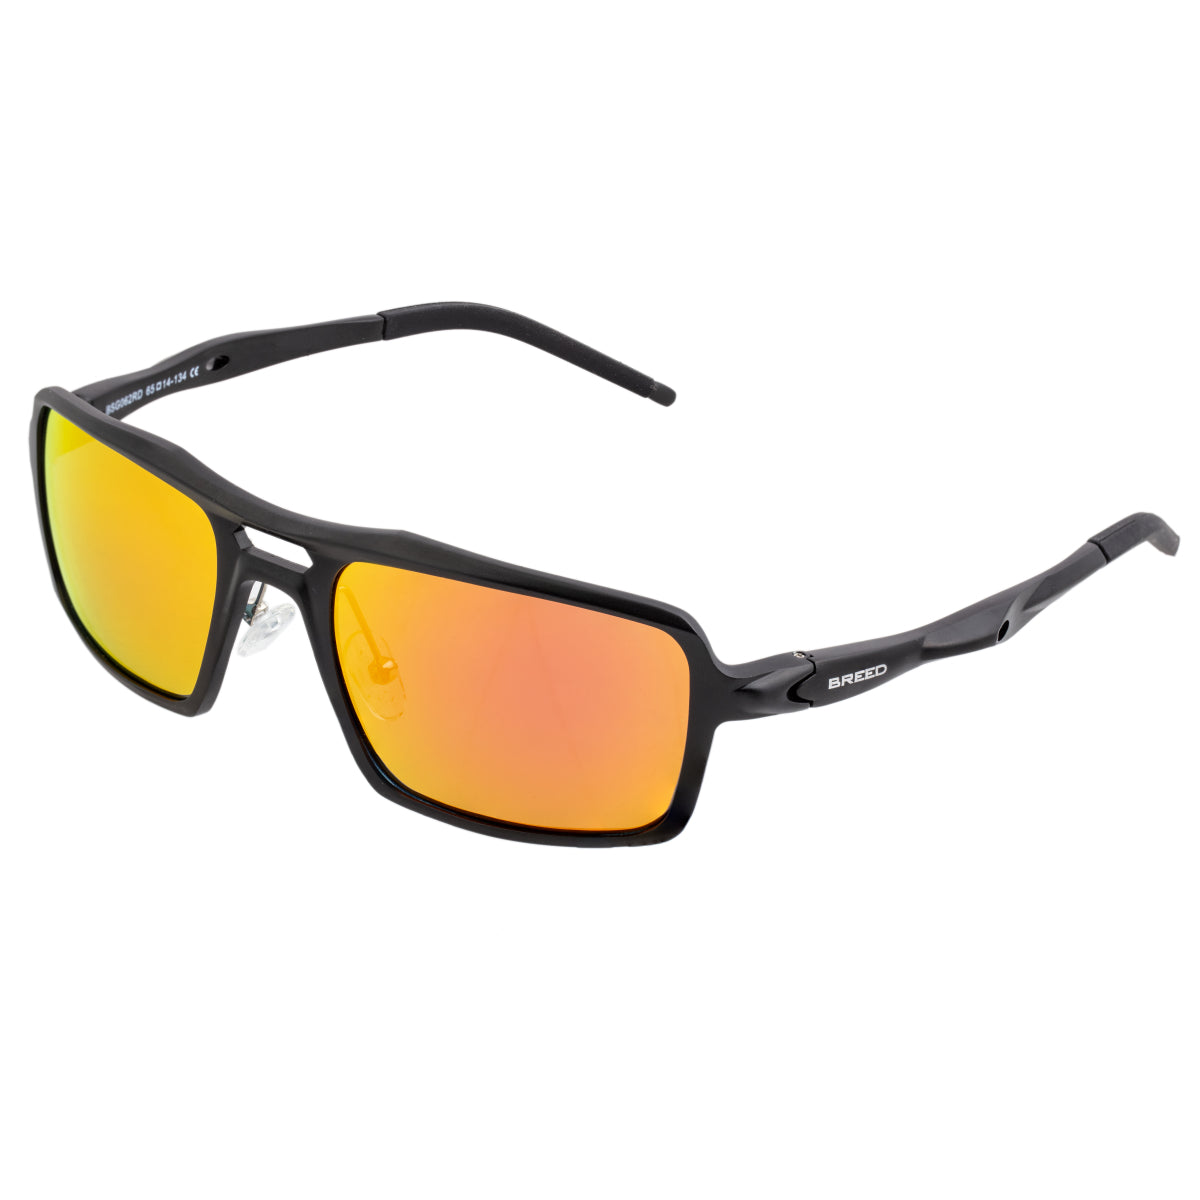 Breed Orpheus Aluminum Polarized Sunglasses - Black/Red-Yellow - BSG062RD